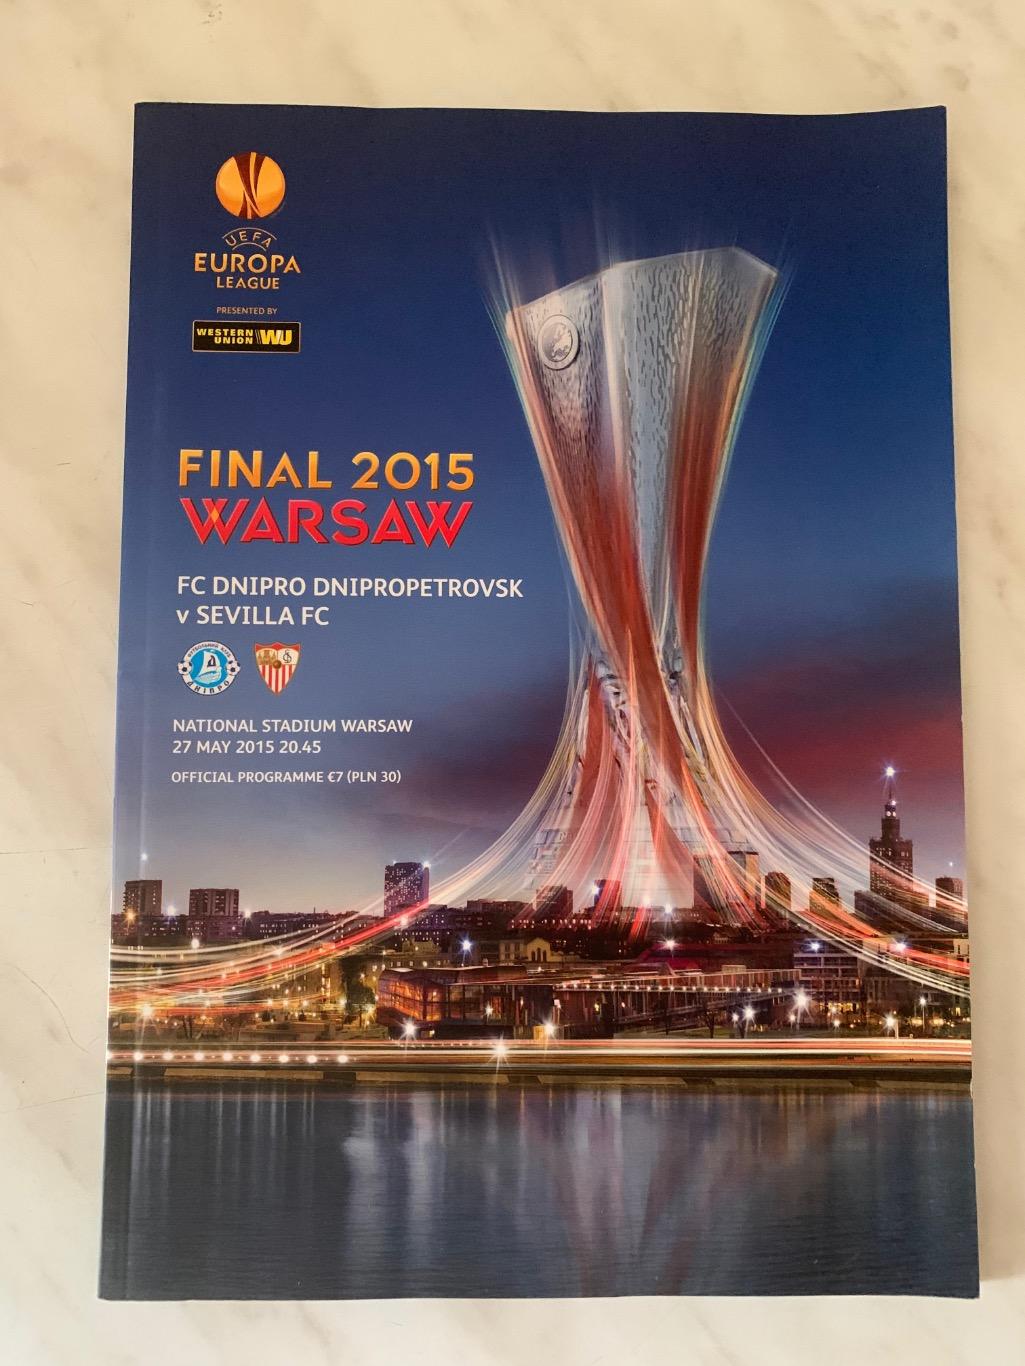 UEFA Europa League Final 2015 Warsaw